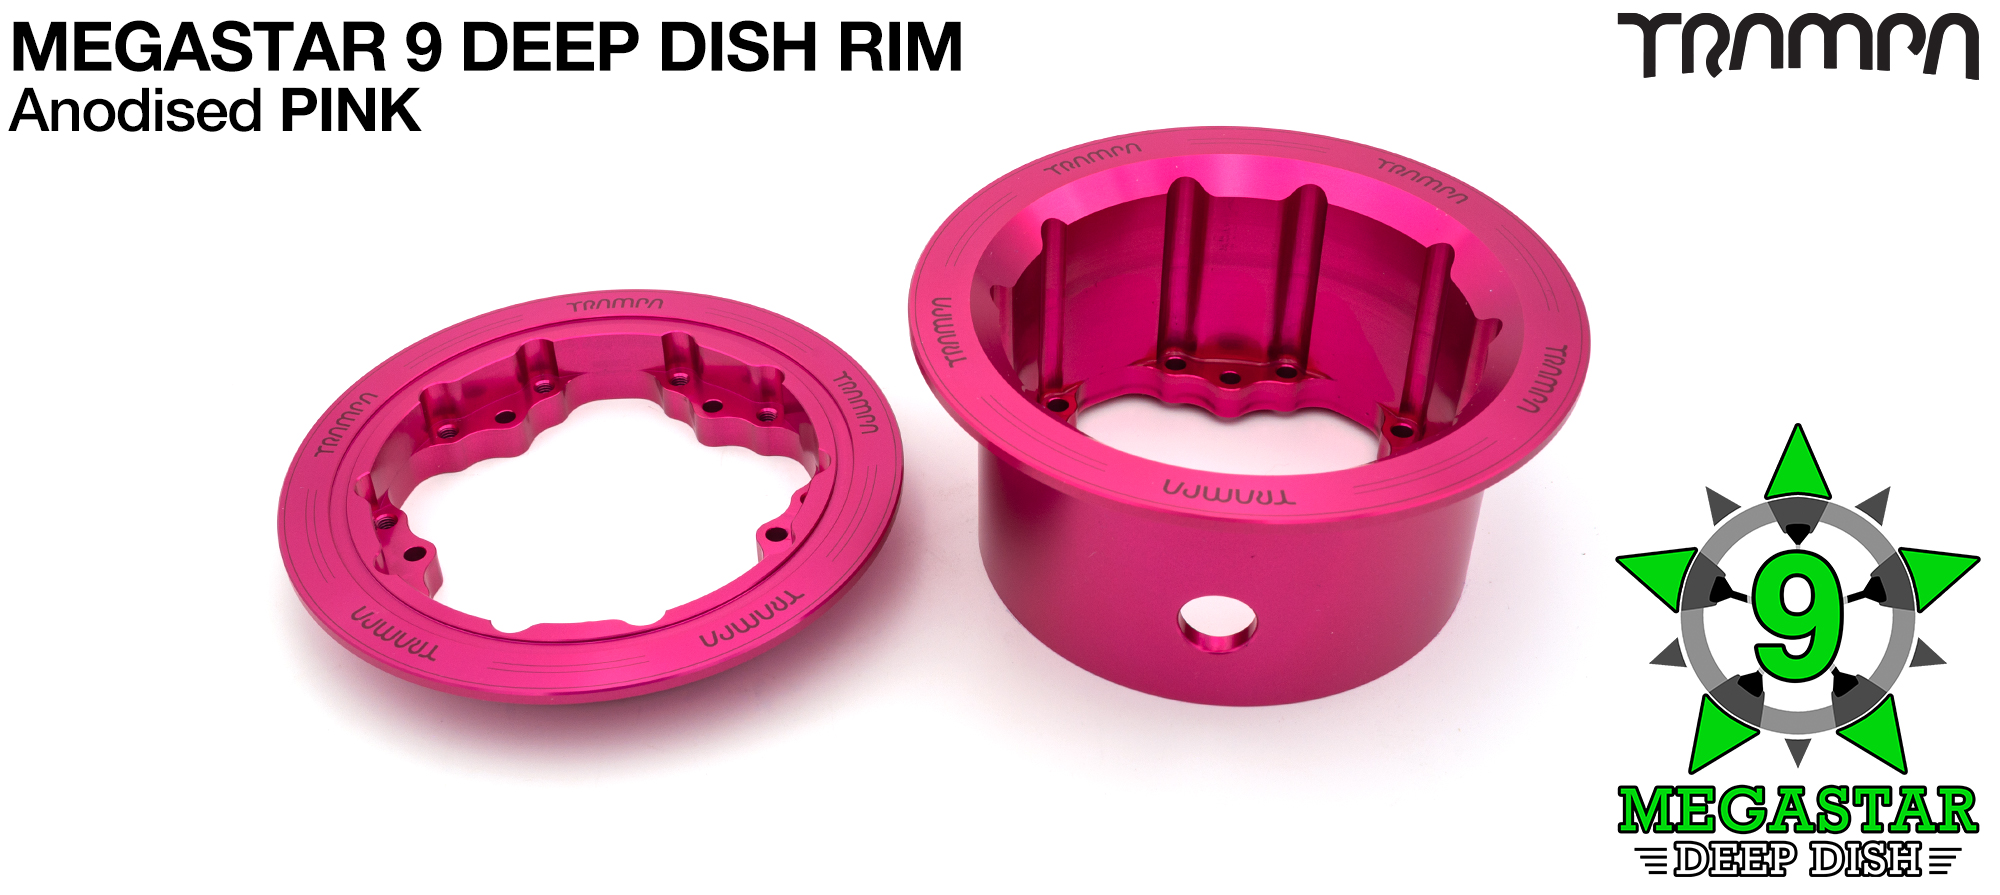 DEEP-DISH MEGASTAR 9 Rims on the REAR - PINK